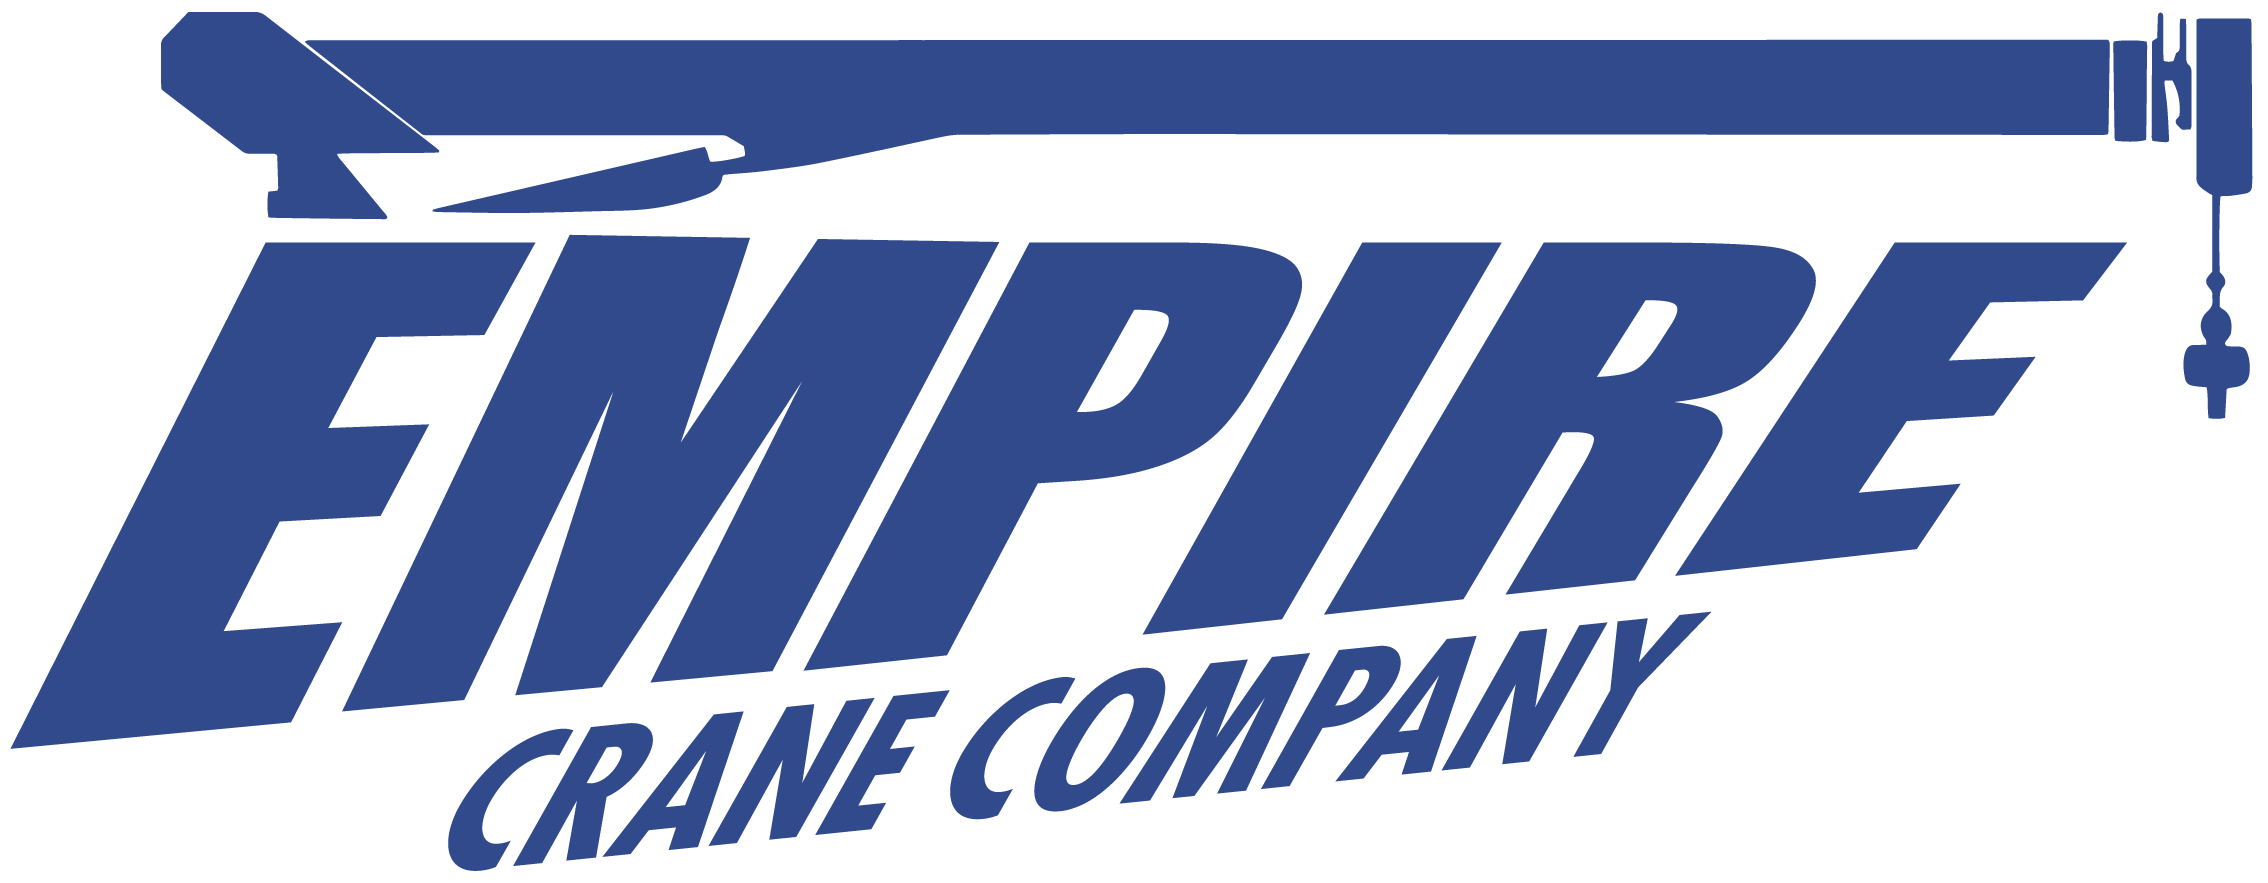 Empire Crane Co., LLC